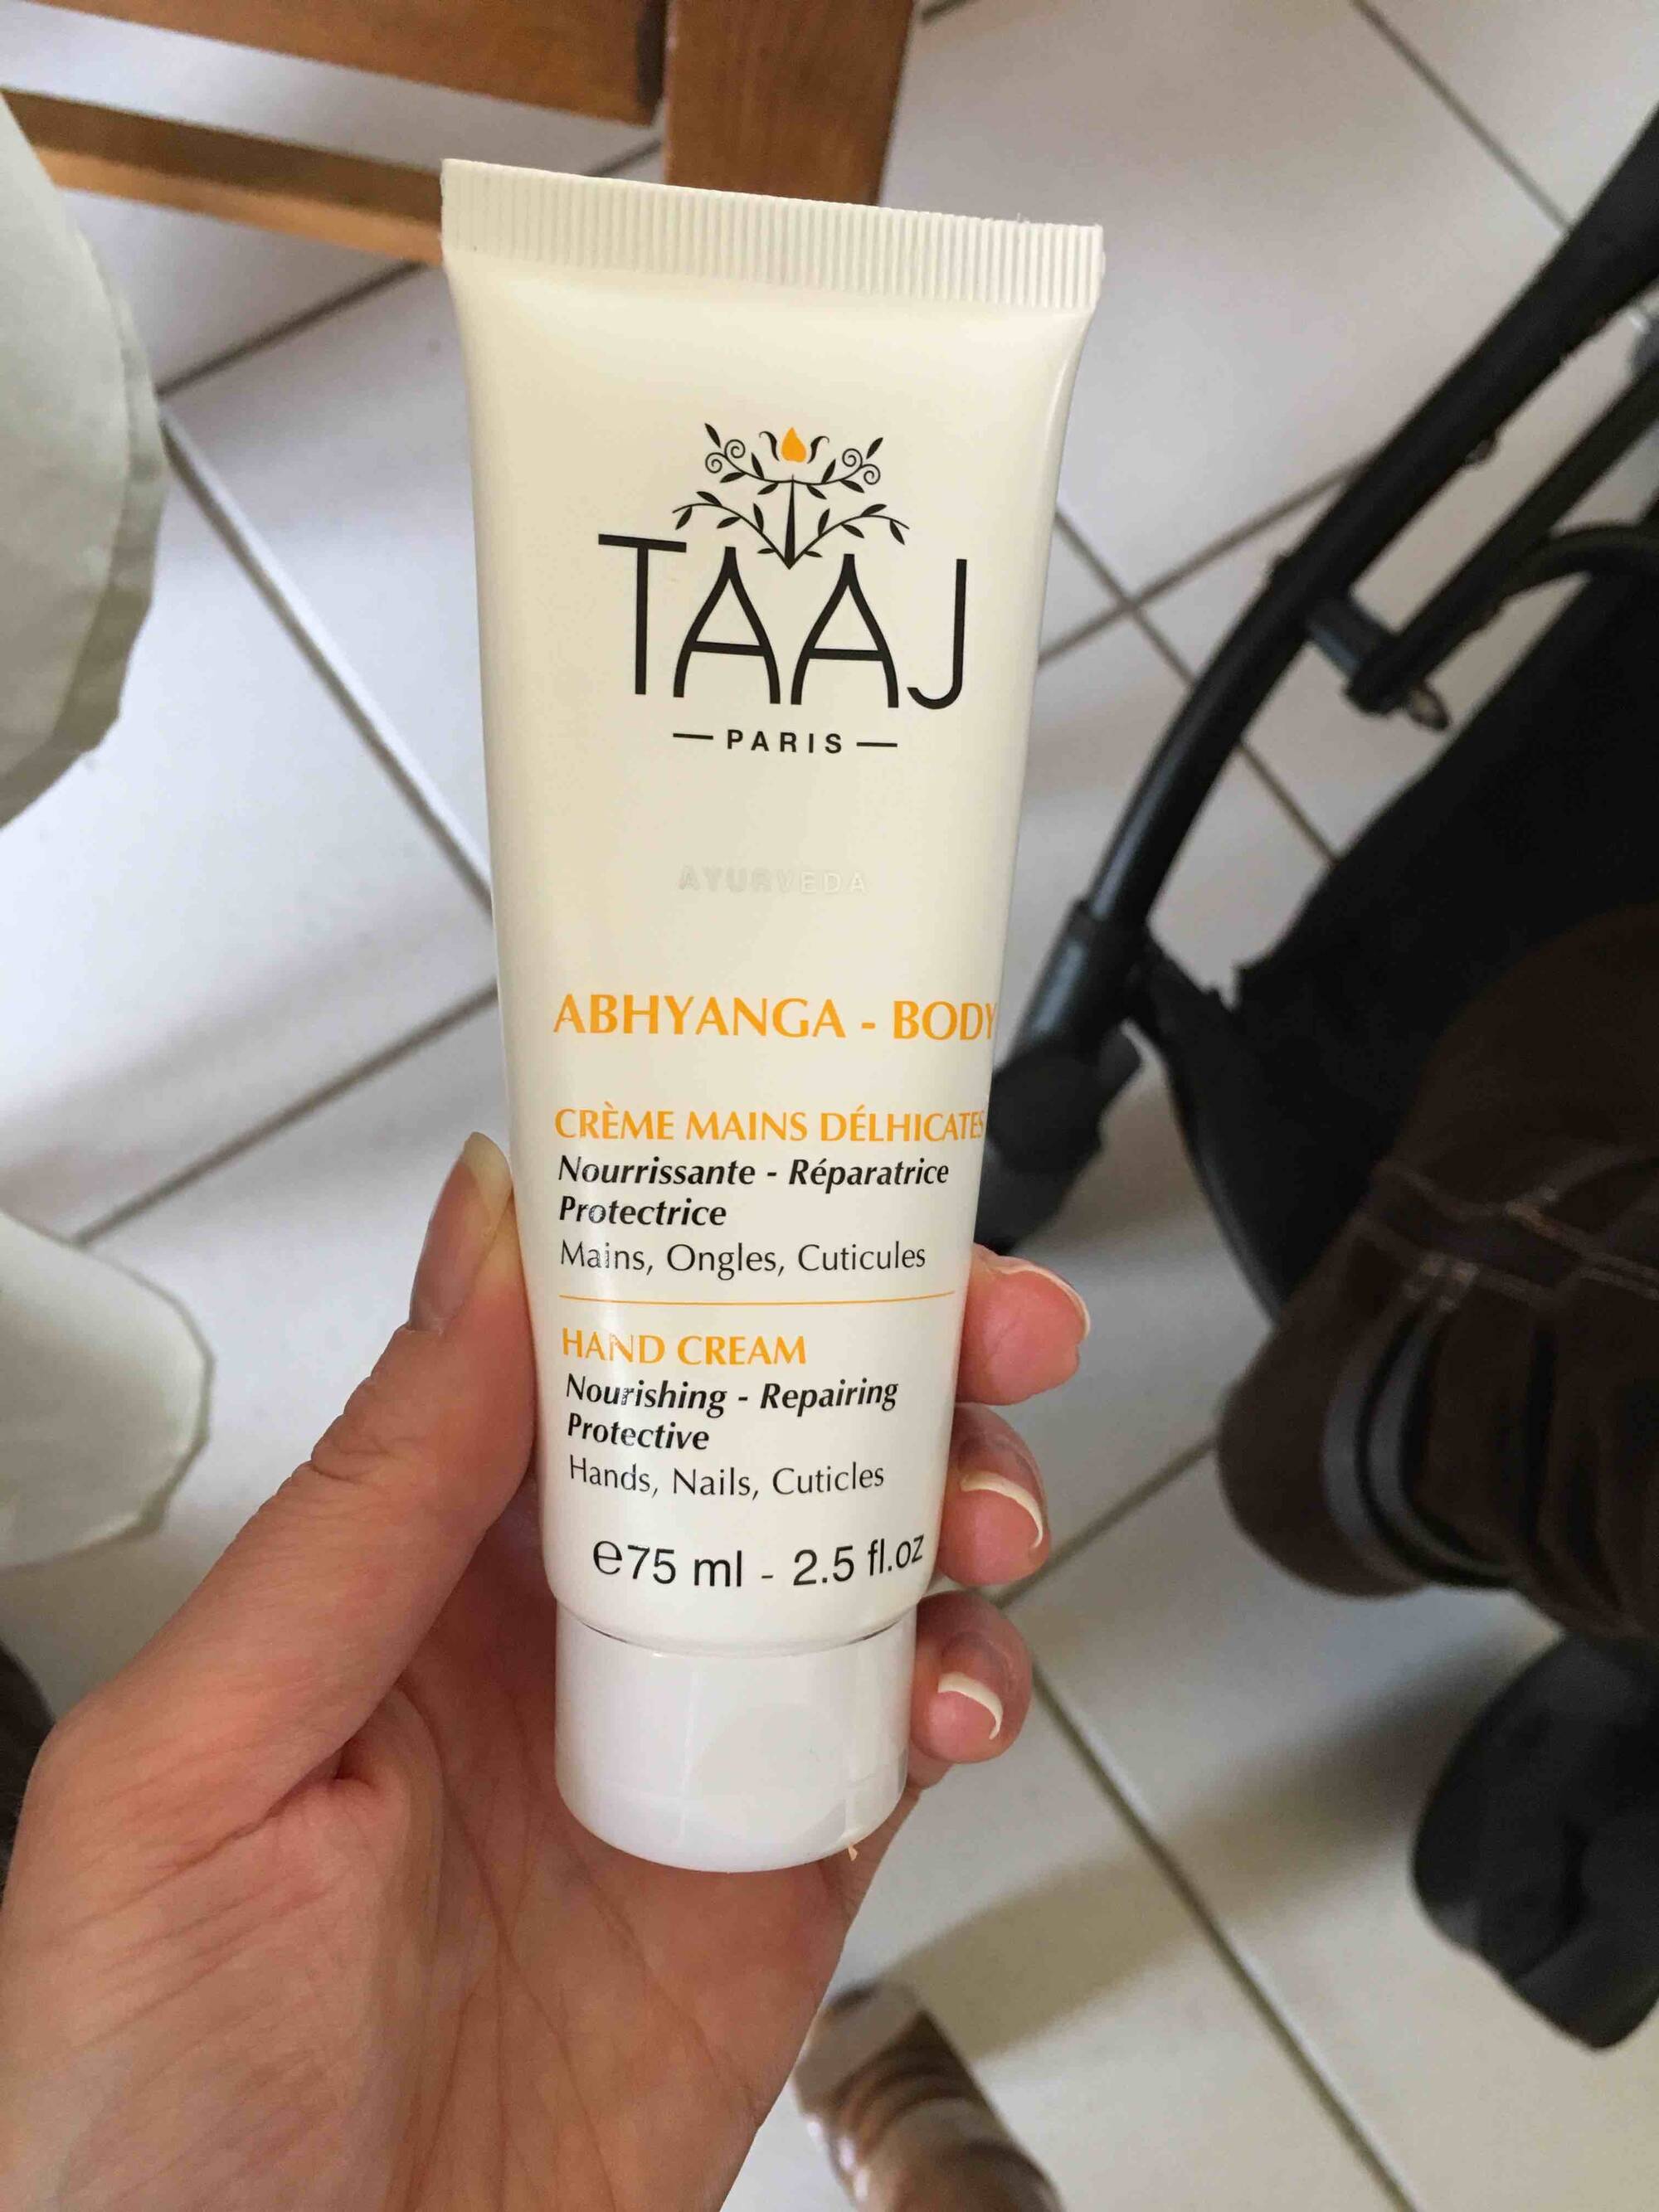 TAAJ - Abhyanga body - Crème mains délhicates